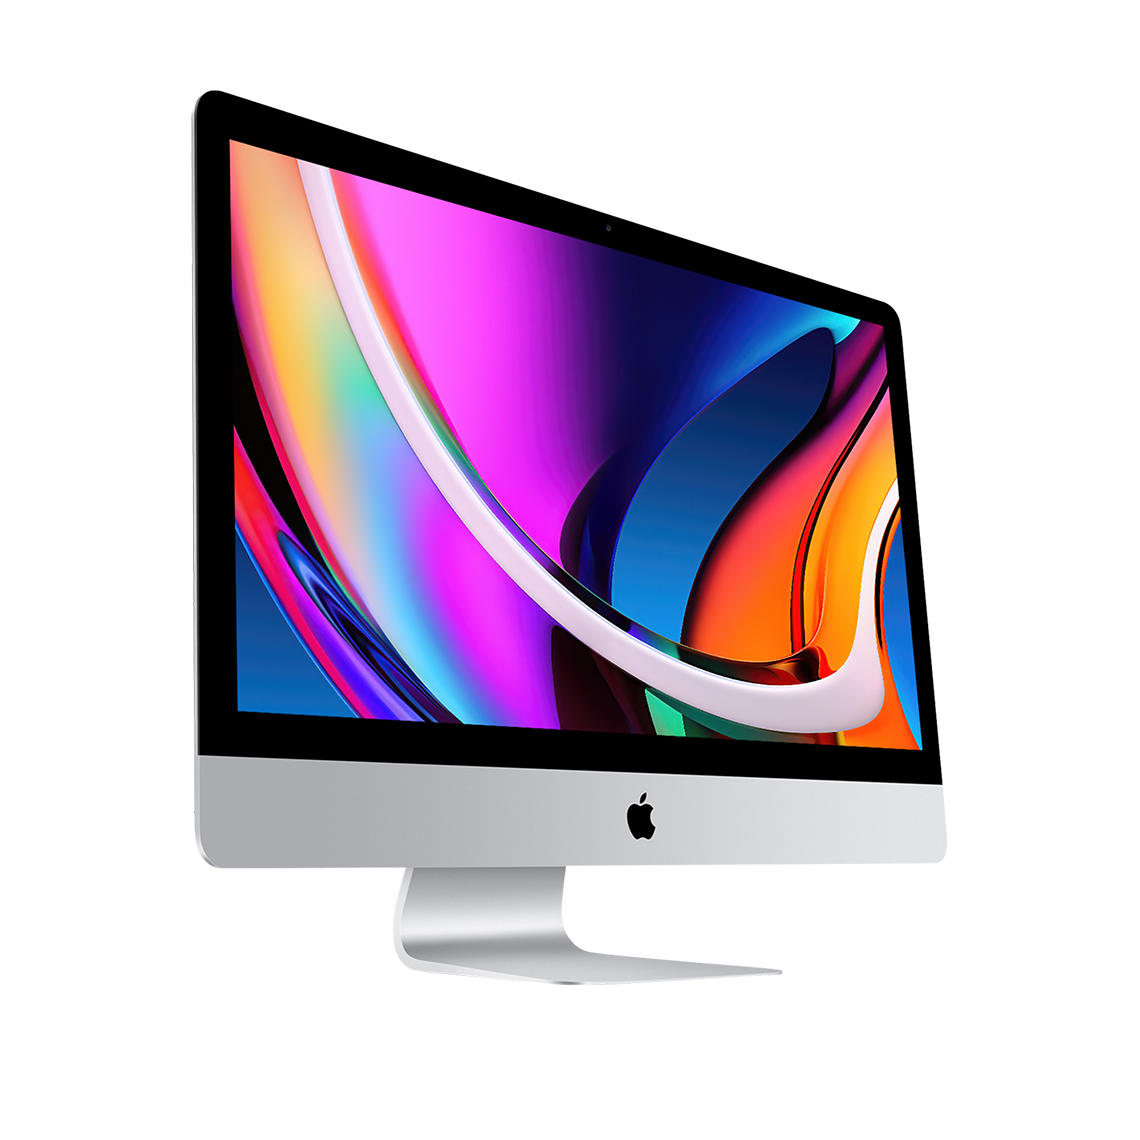 2020 iMac 27-inch 5K - Intel Core i9, 128GB, 1TB Flash, Radeon Pro 5300 4GB, Grade A